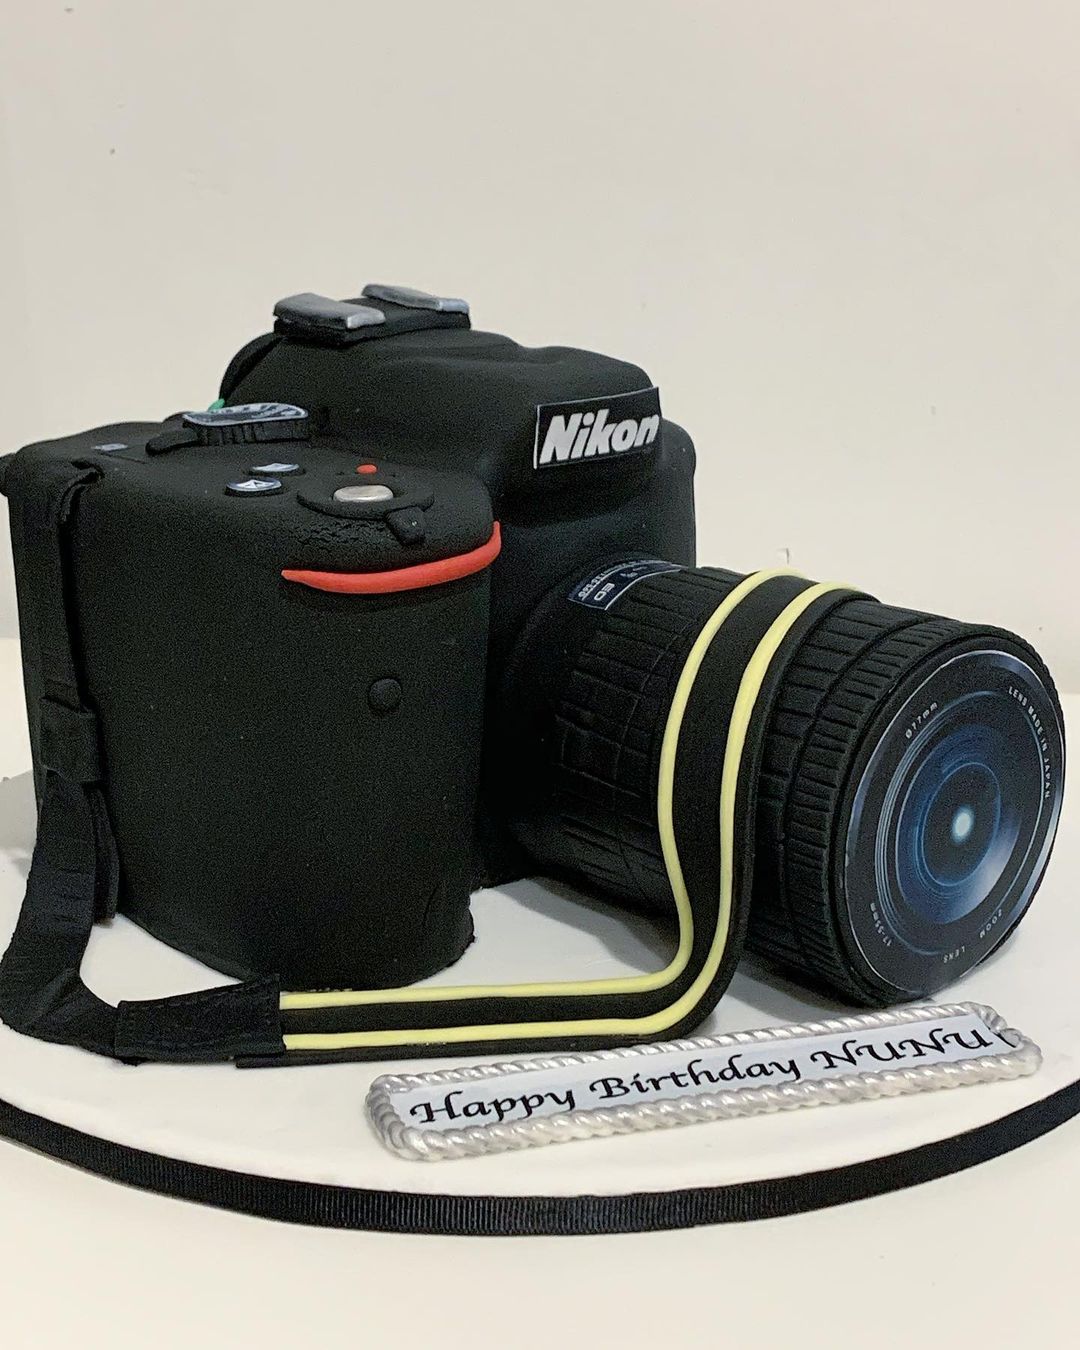 Birthday camera cake